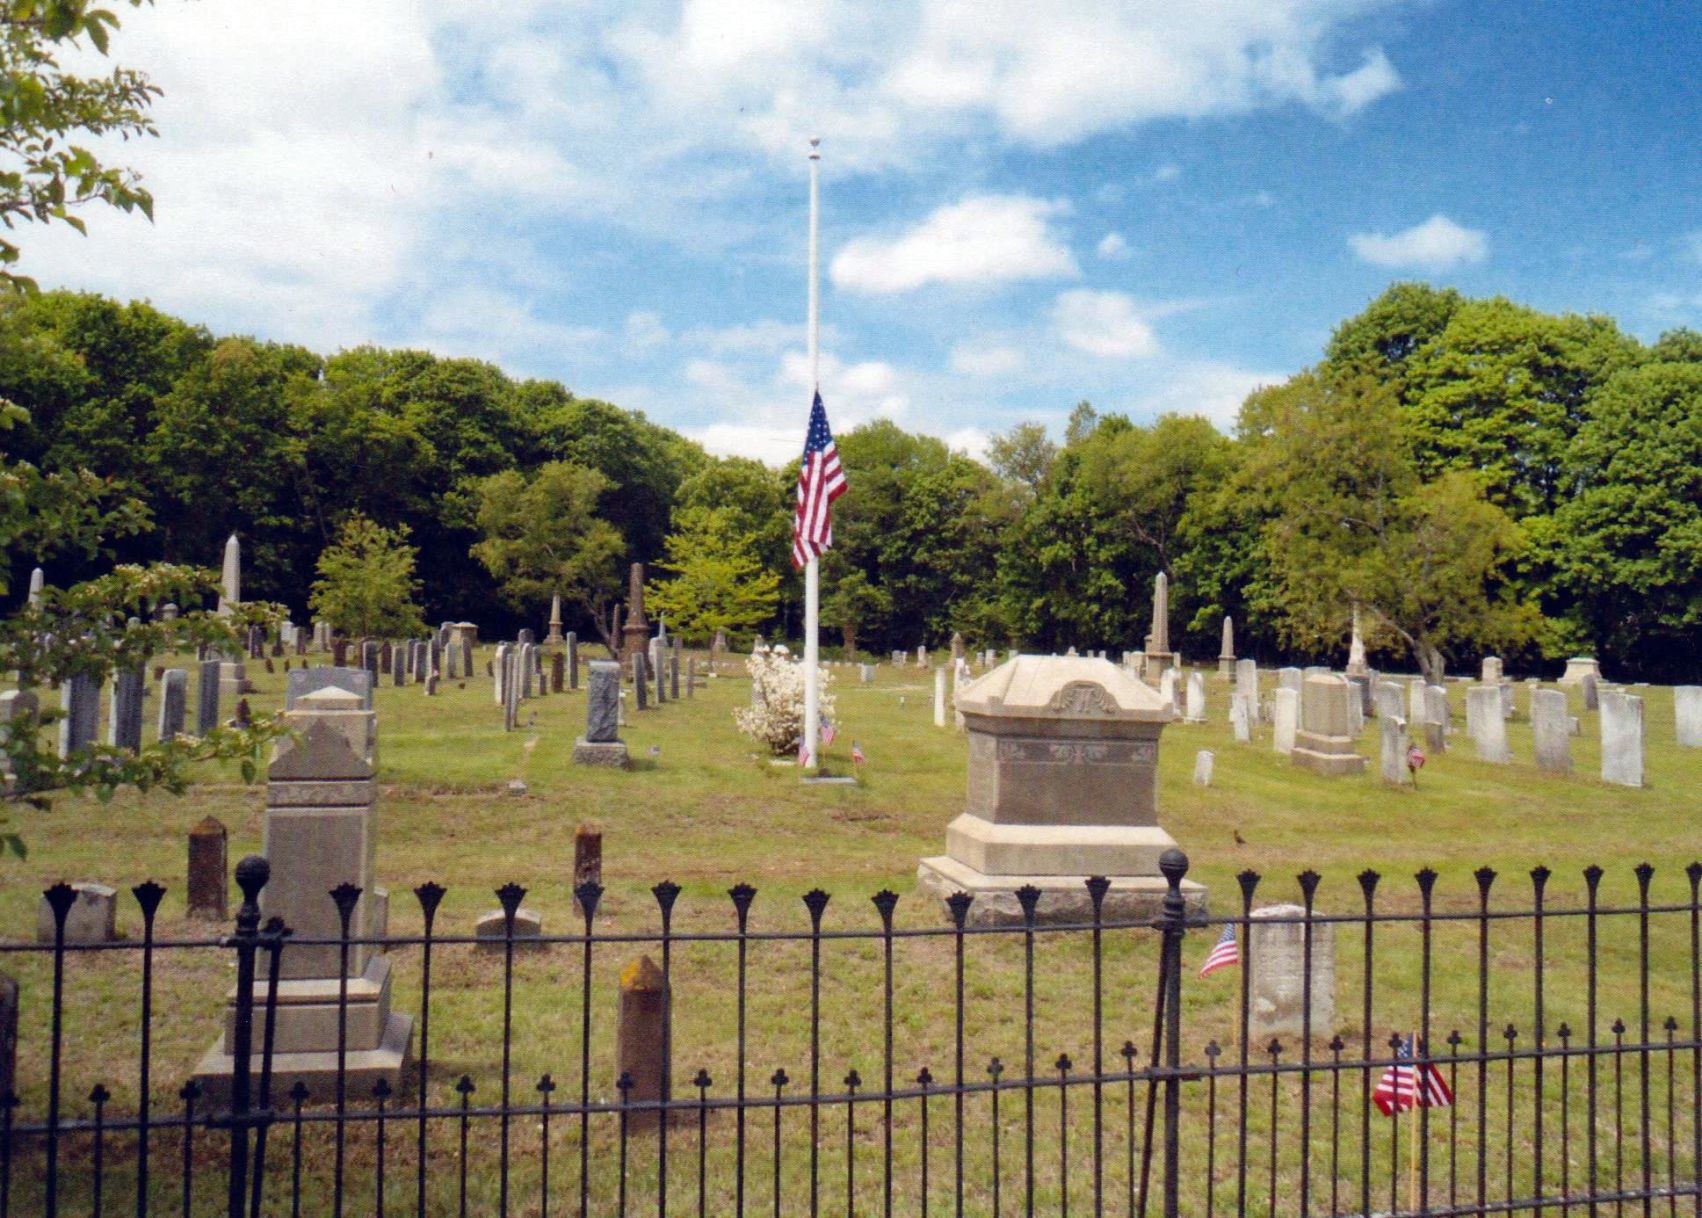 Old Saybrook Memorial Day cemetery tour honoring veterans